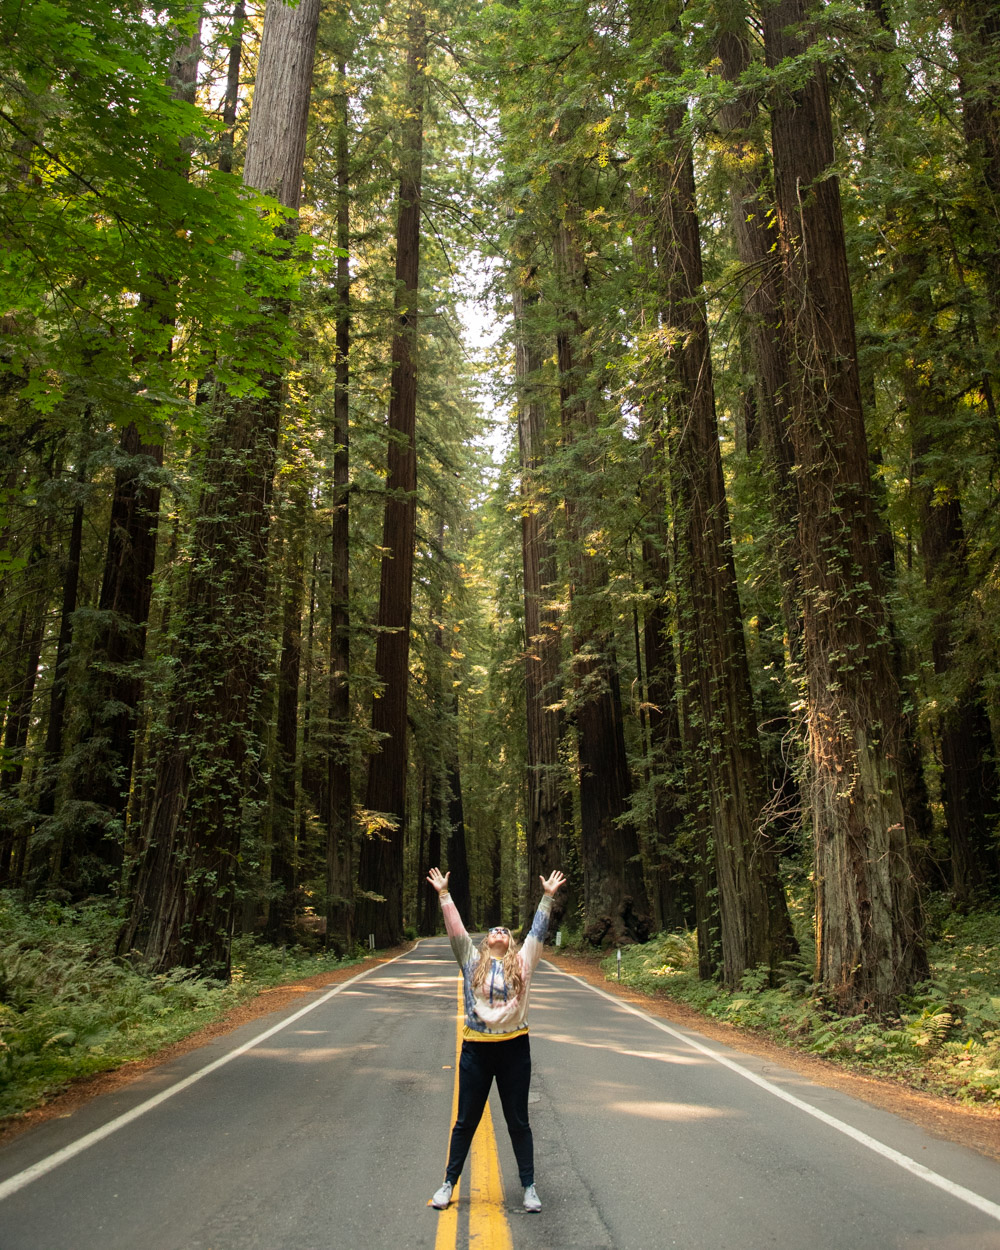 A Road Trip Up the Redwood Coast